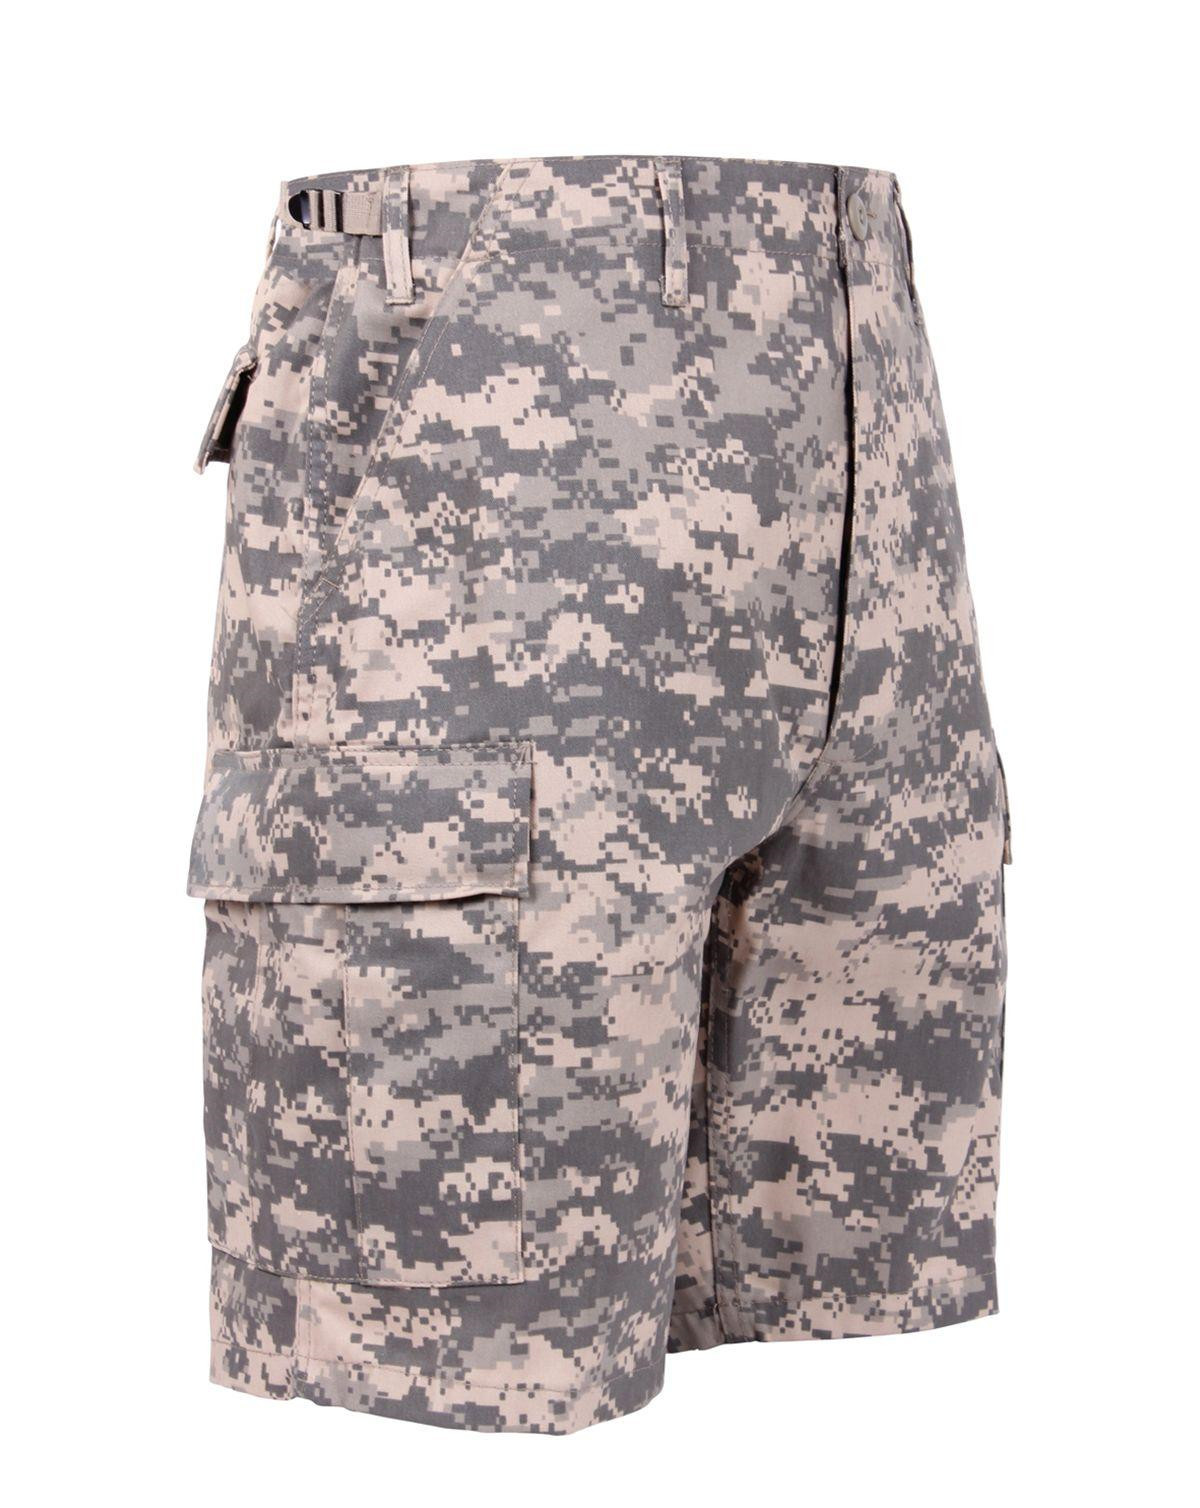 Rothco BDU Shorts (ACU Camo, Large / 35"-39")